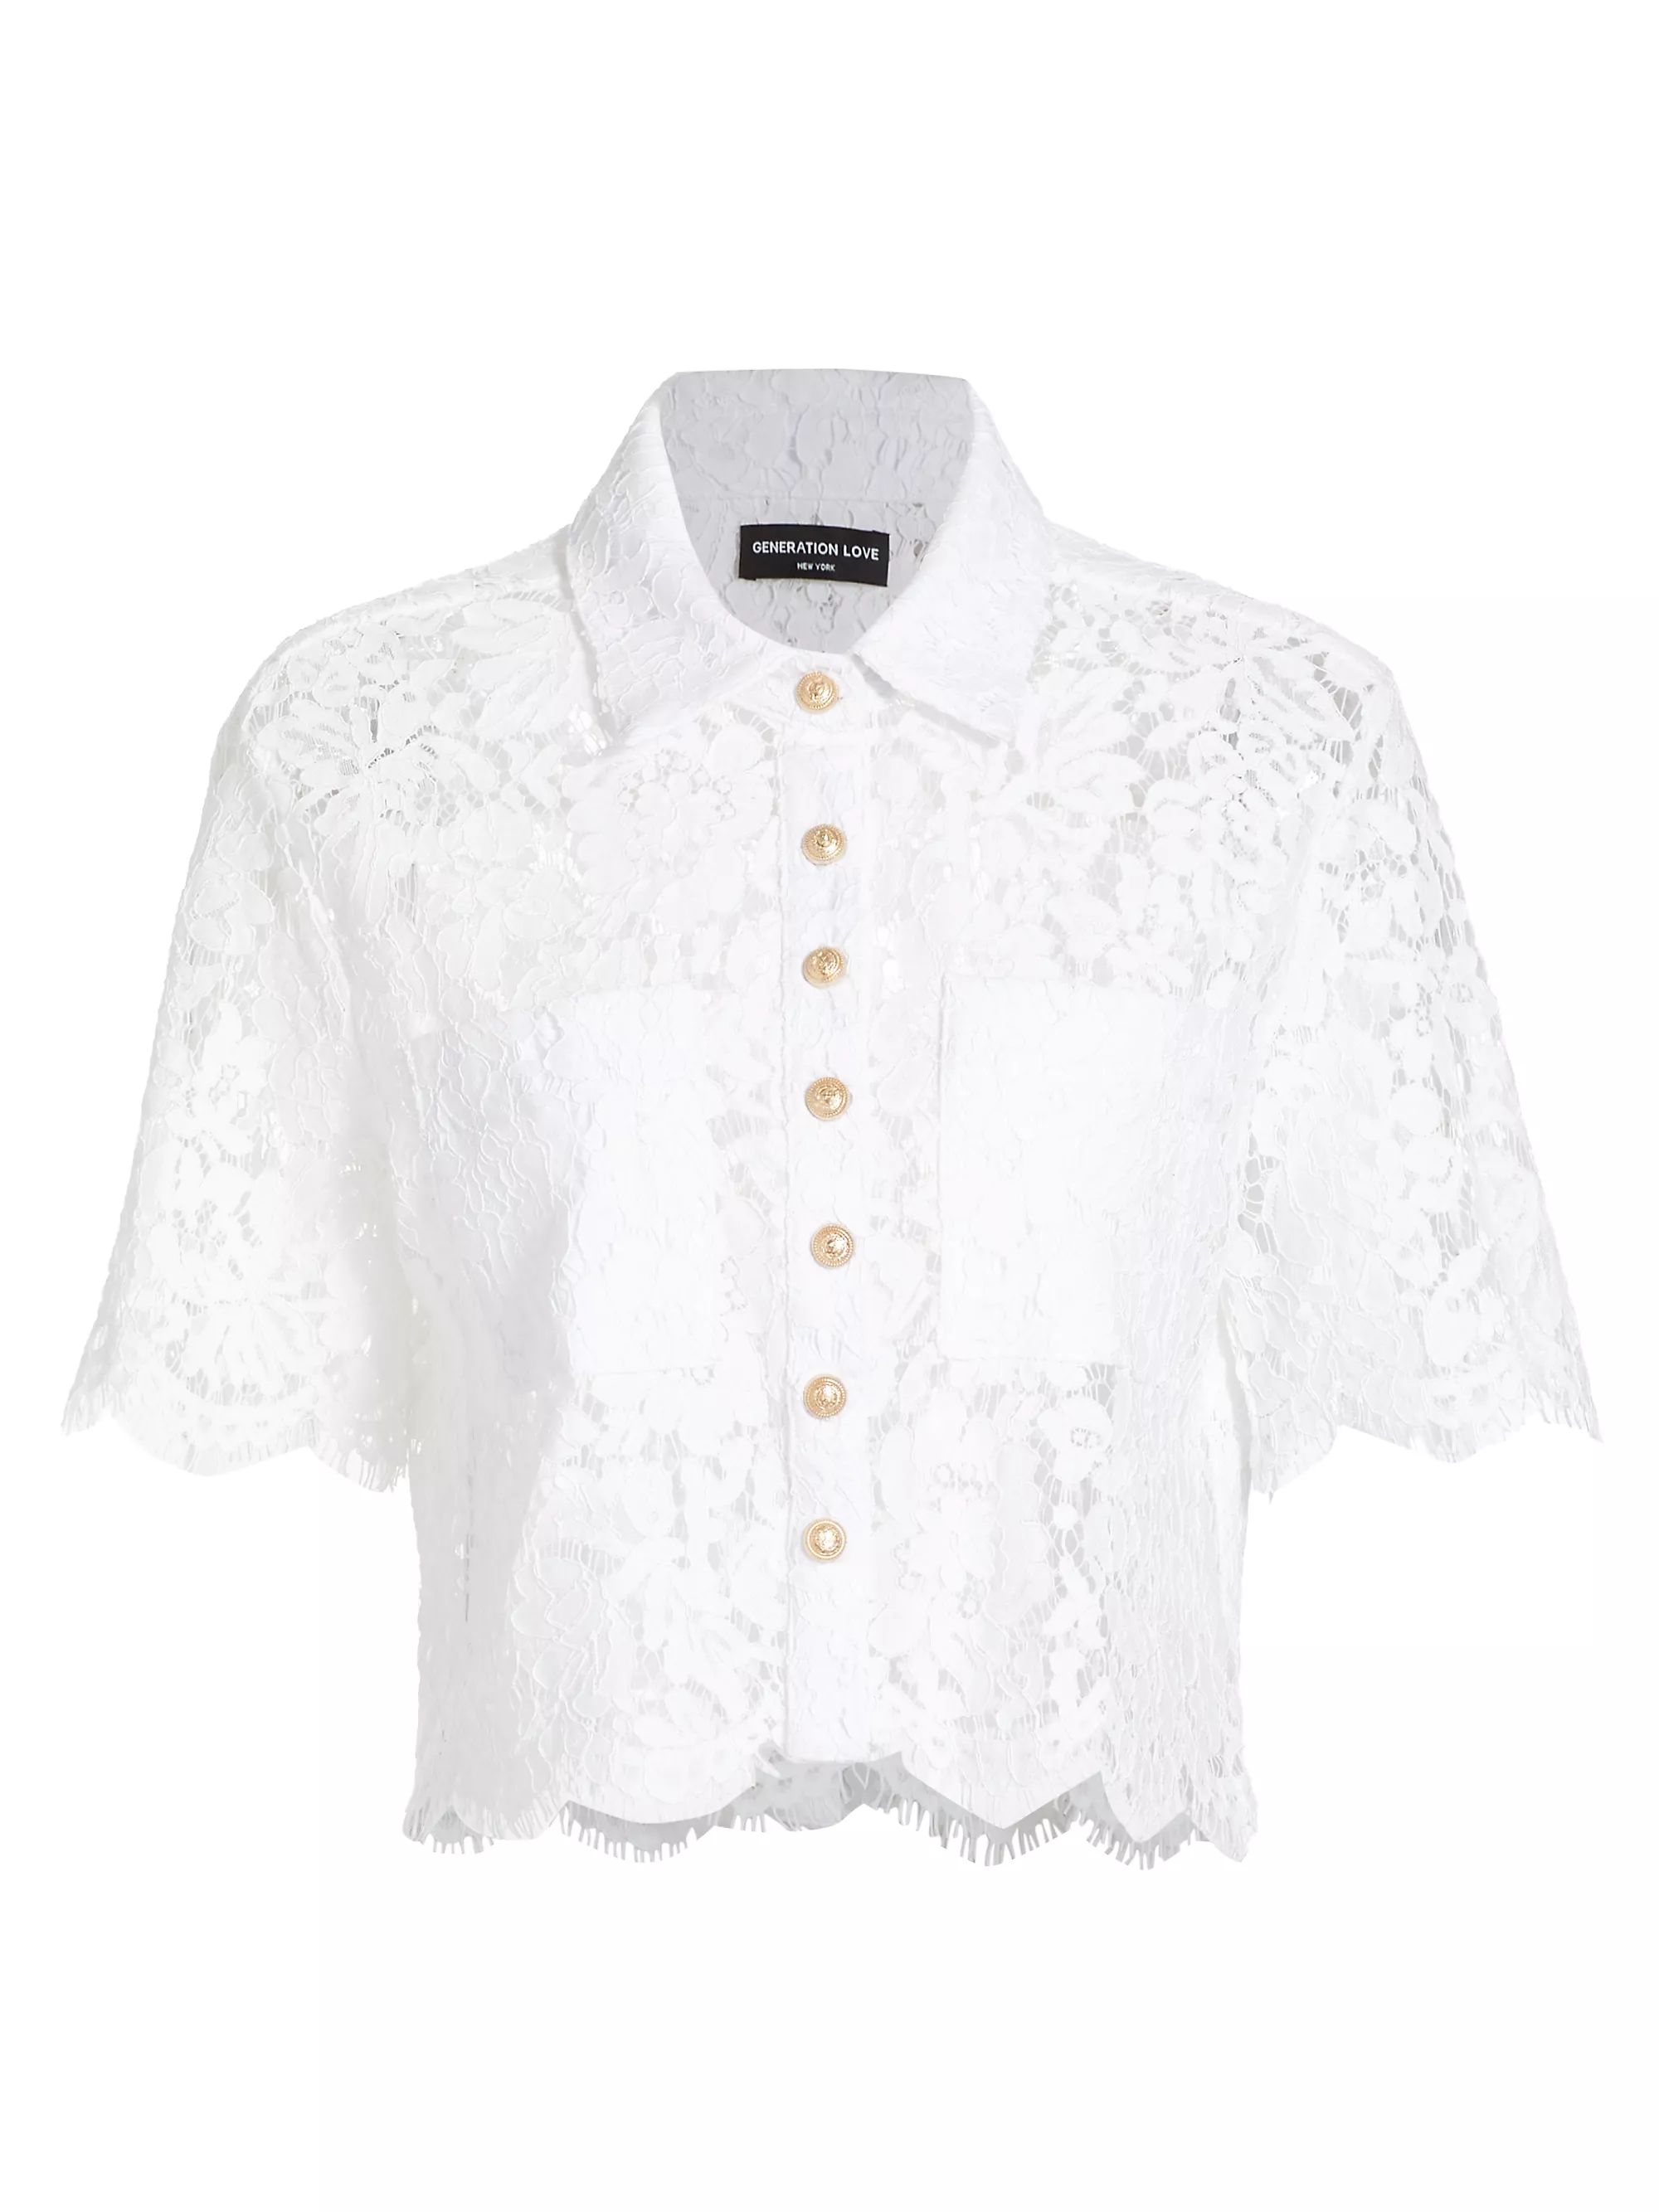 Shop Generation Love Juni Lace Shirt | Saks Fifth Avenue | Saks Fifth Avenue